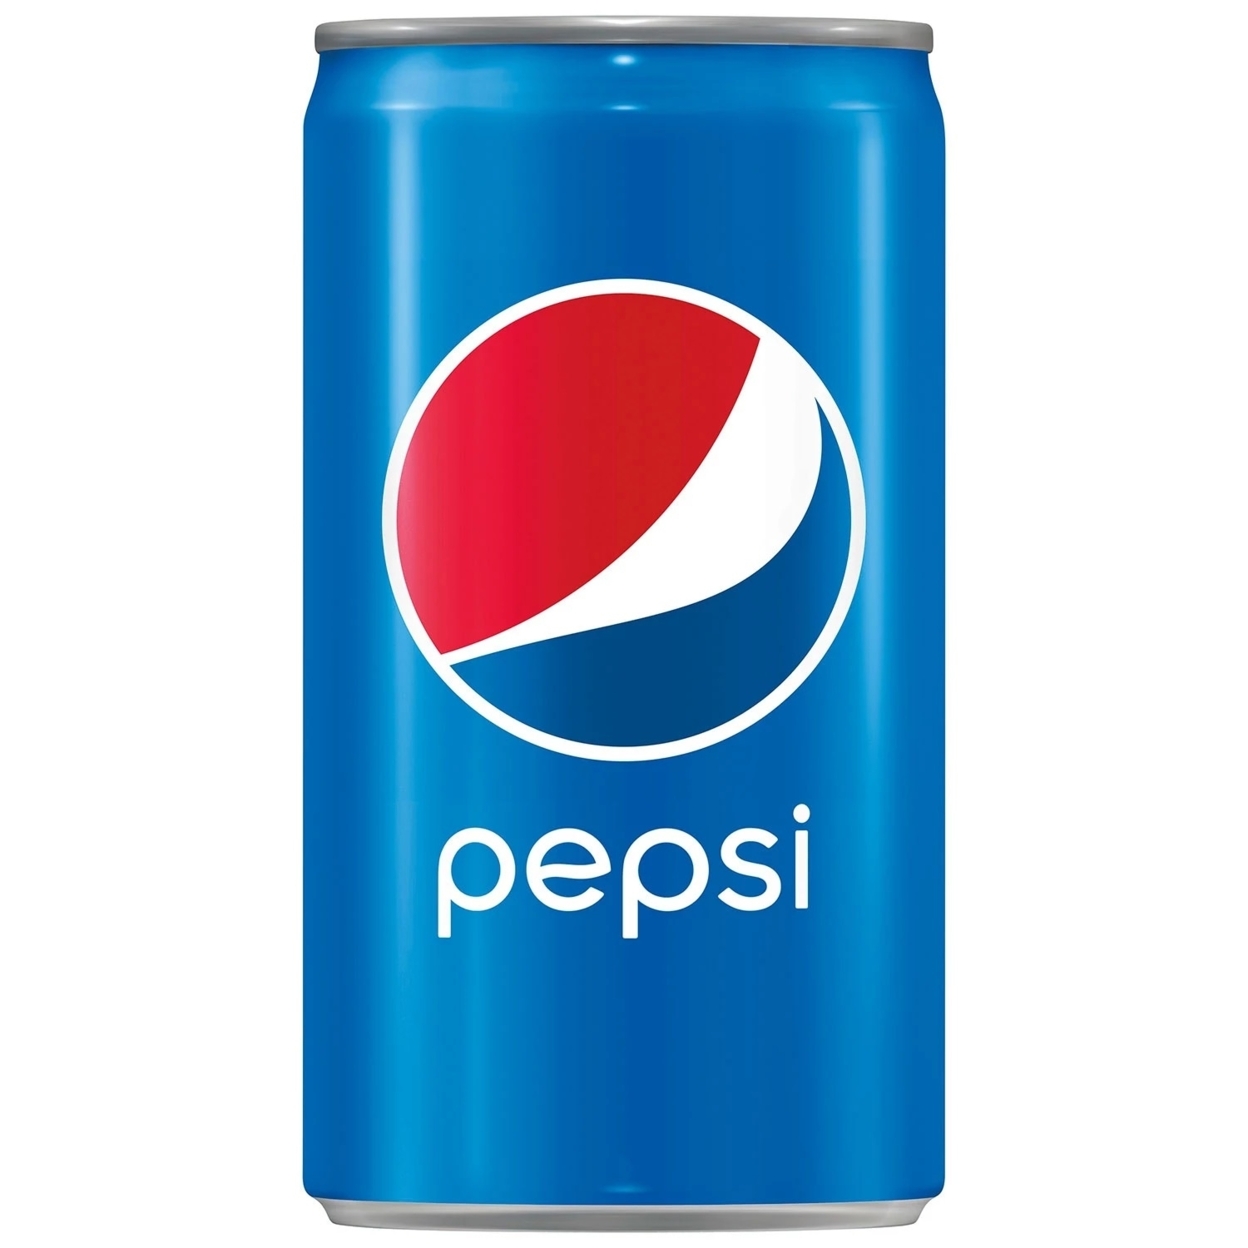 Pepsi Mini Cans, 7.5 Fluid Ounce (30 Count)